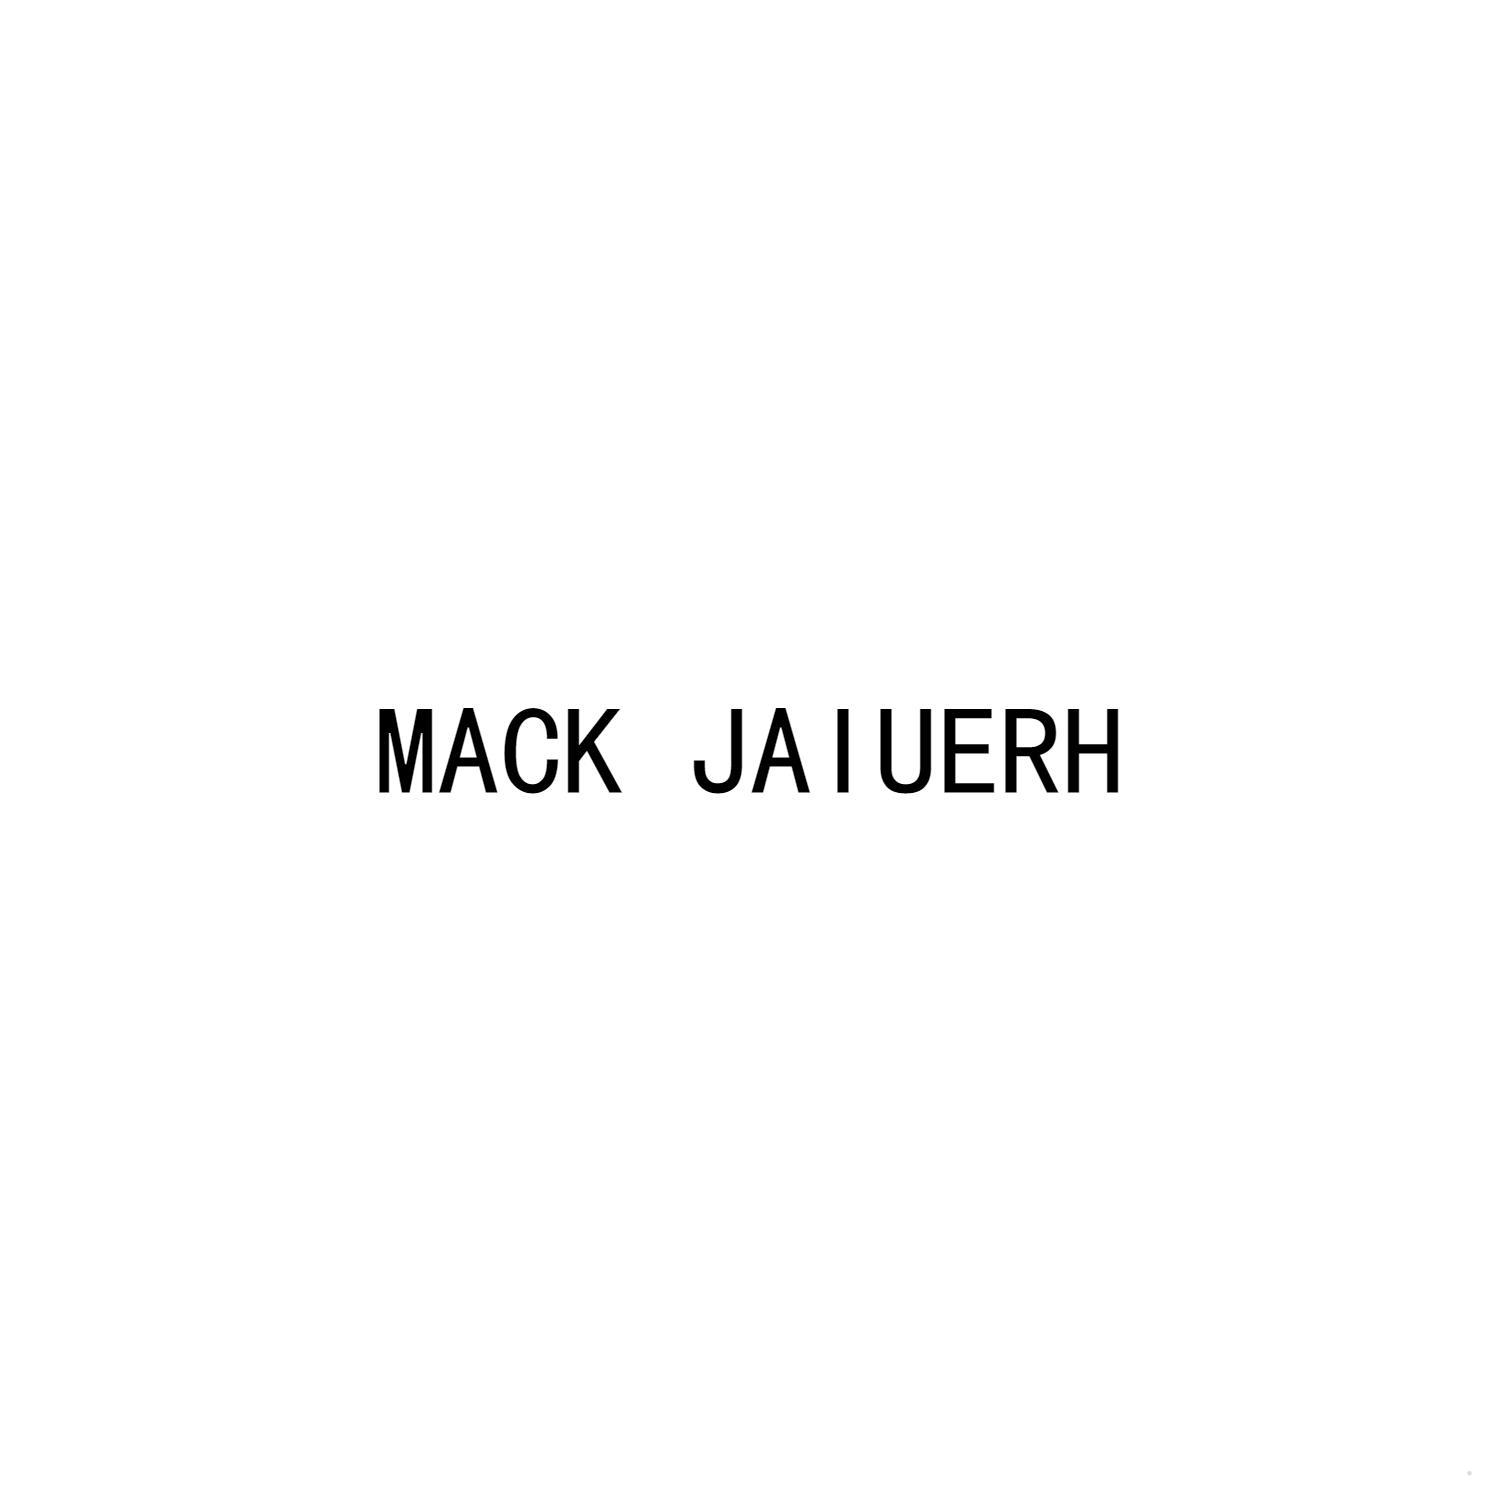 MACK JAIUERH